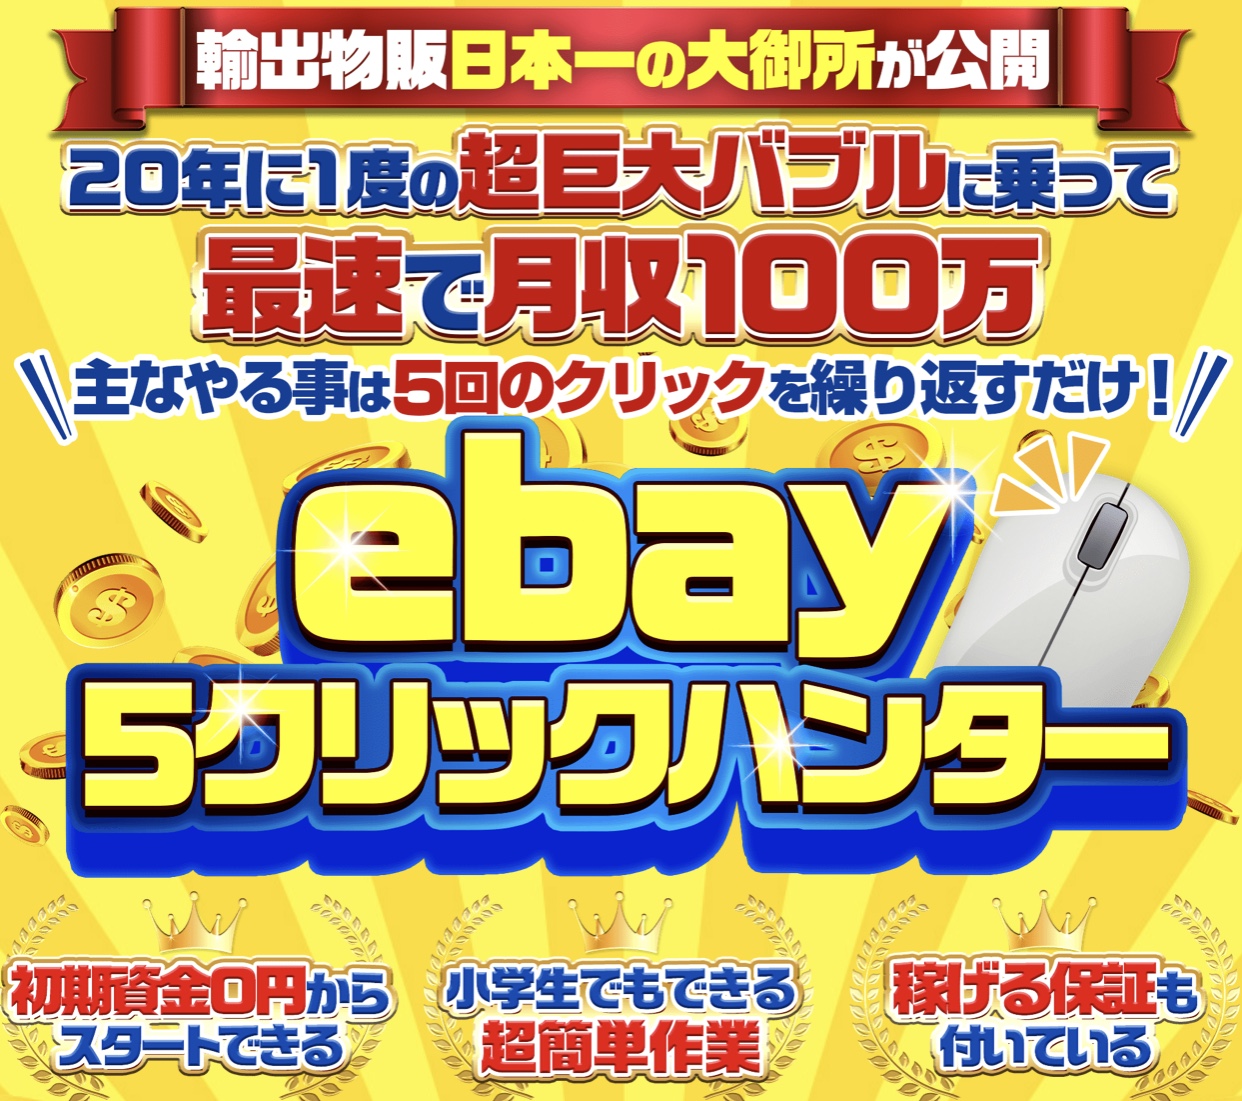 ebay5クリックハンター